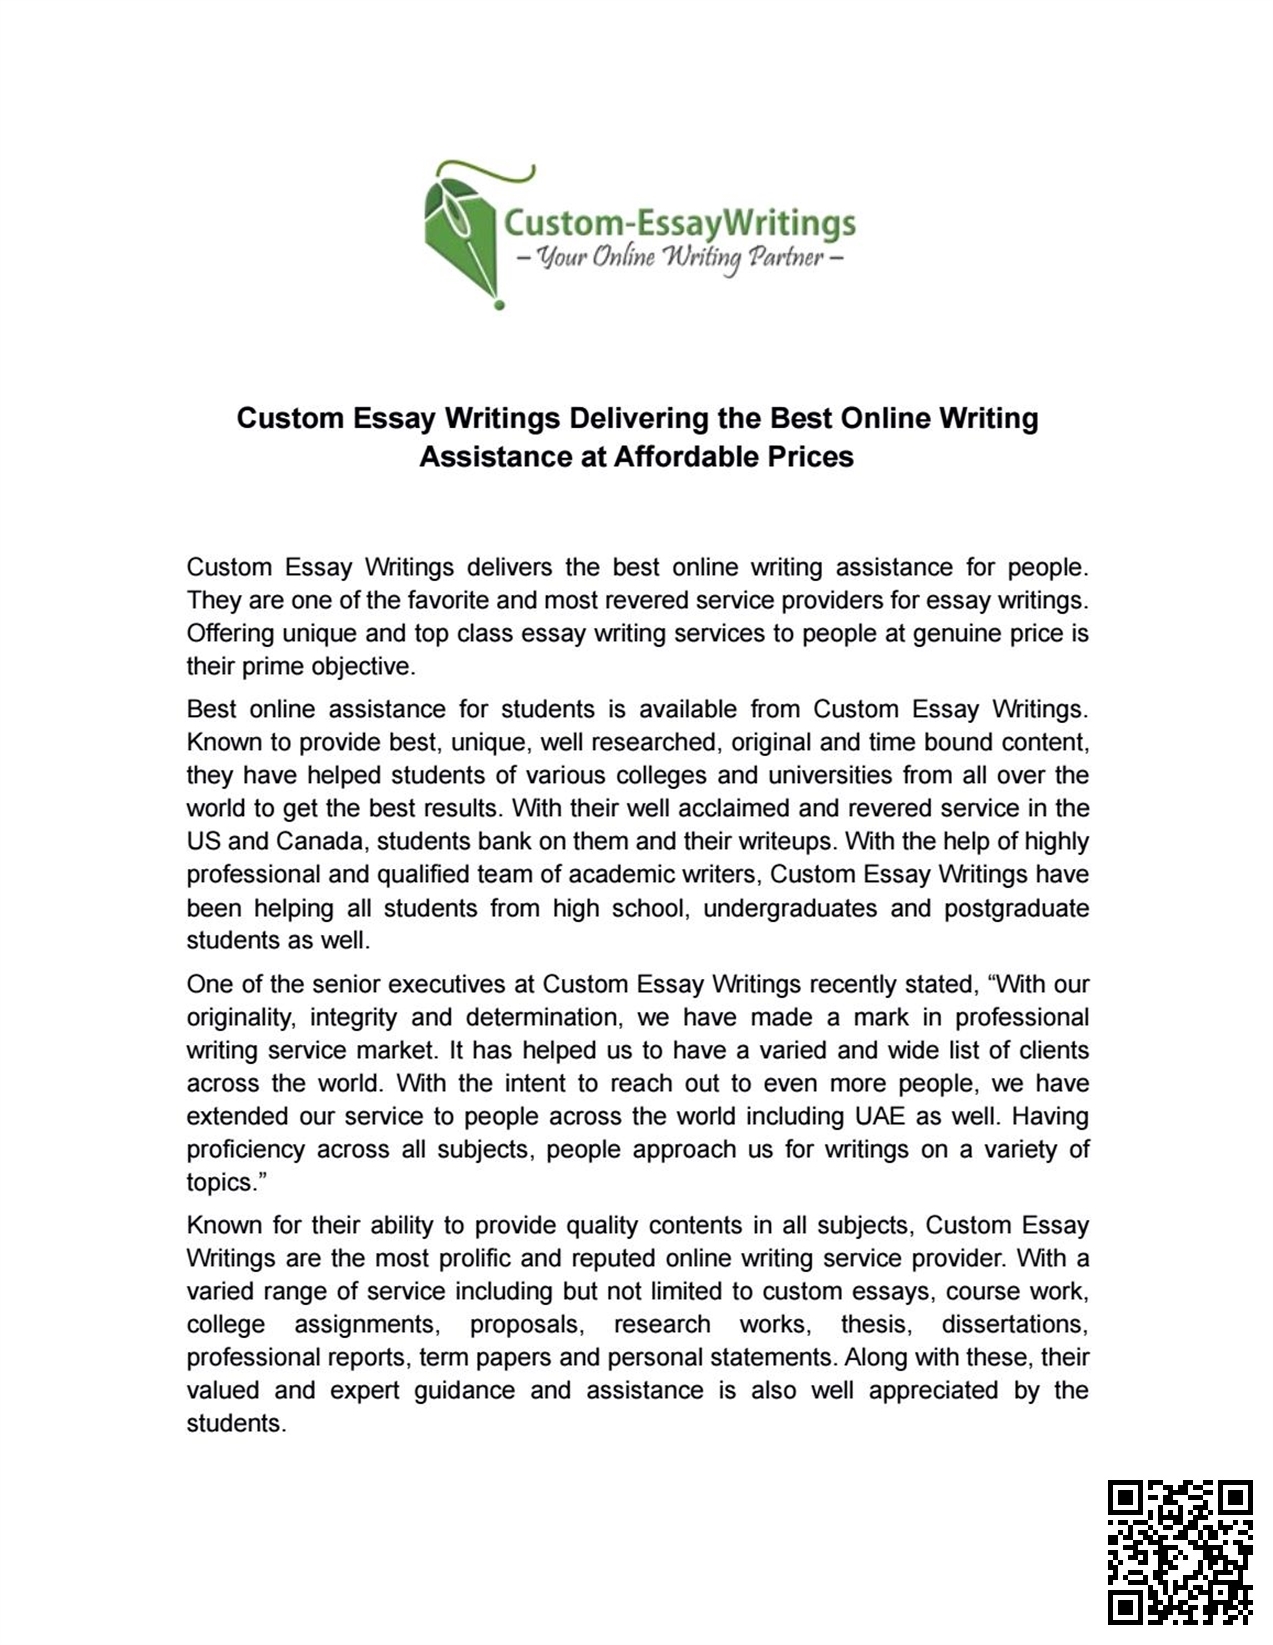 Custom essay writing services